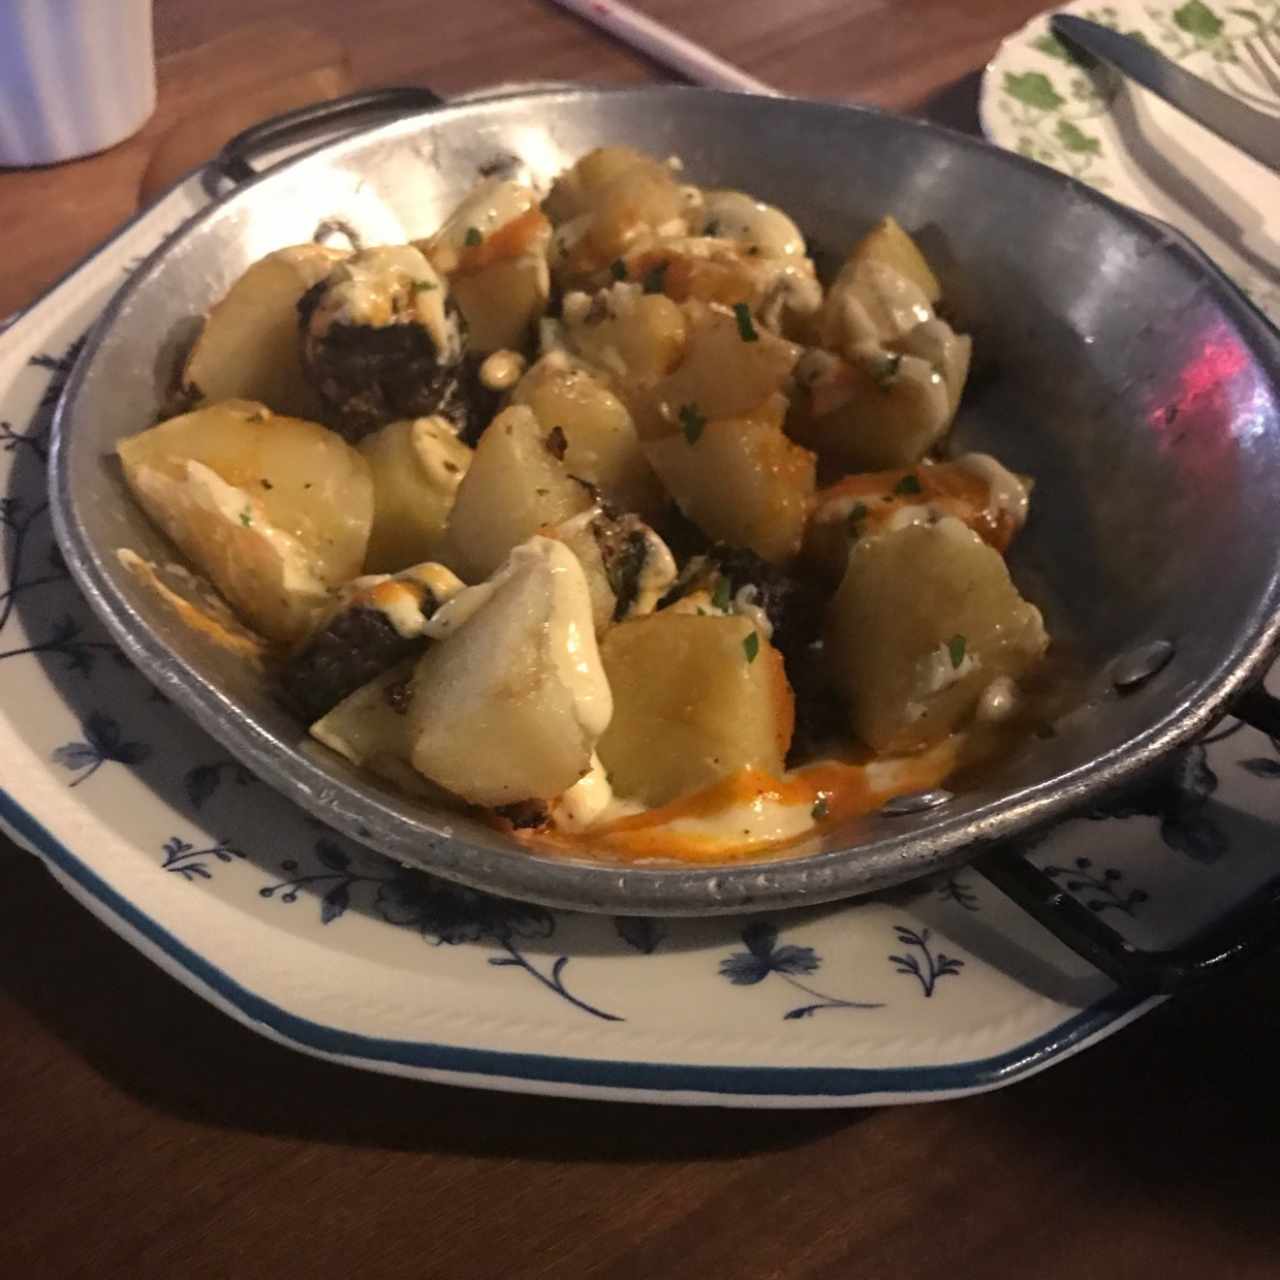 patatas bravas con morcilla